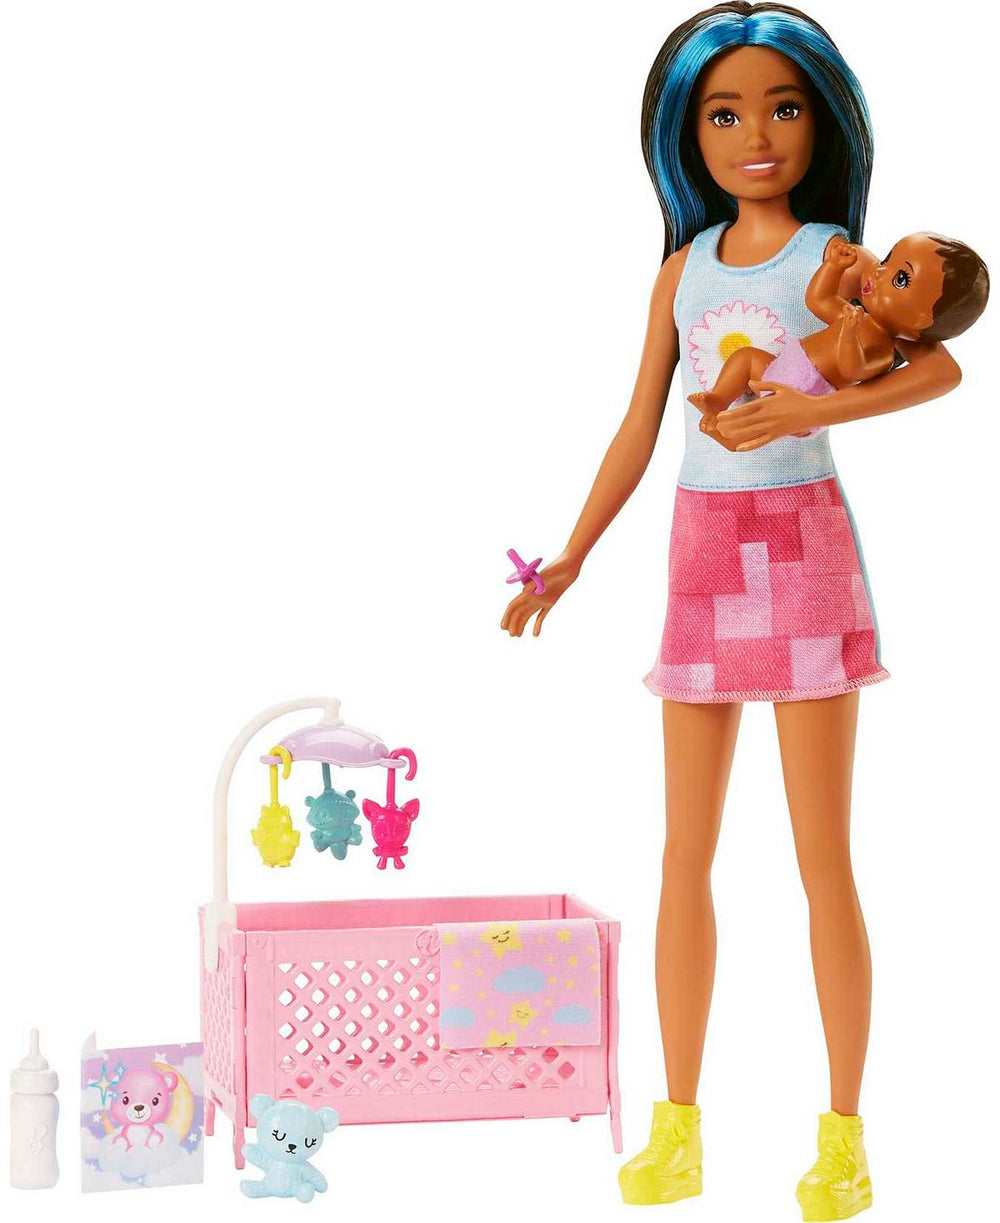 Barbie Skipper Babysitters Inc. Playset - Brunette with Sleepy Baby Doll